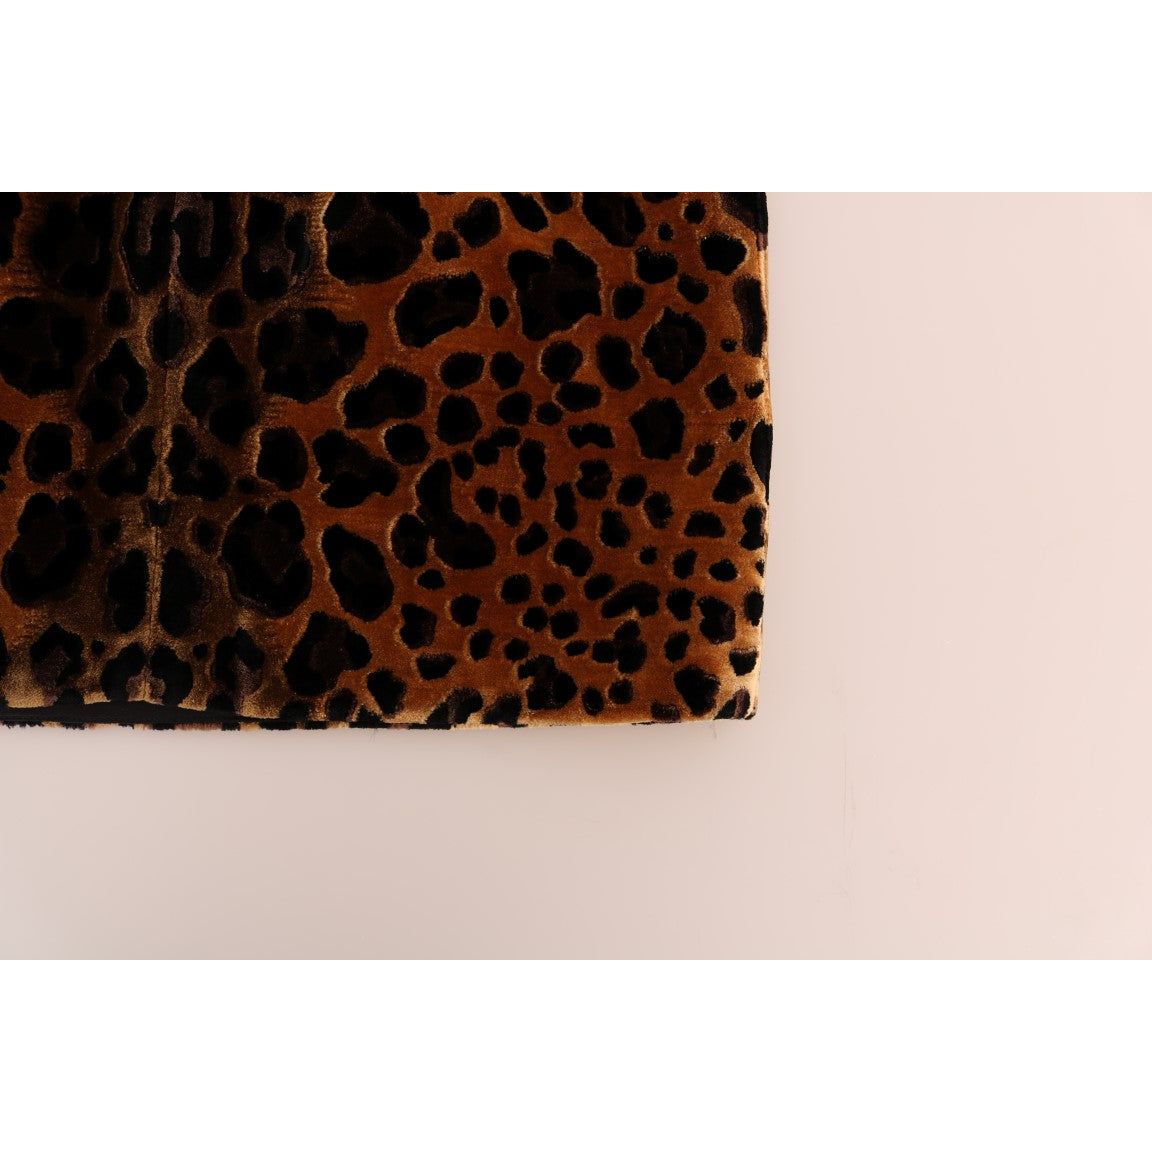 Dolce & Gabbana Sleeveless Leopard Mini Sheath Dress brown-leopard-print-silk-sheath-dress